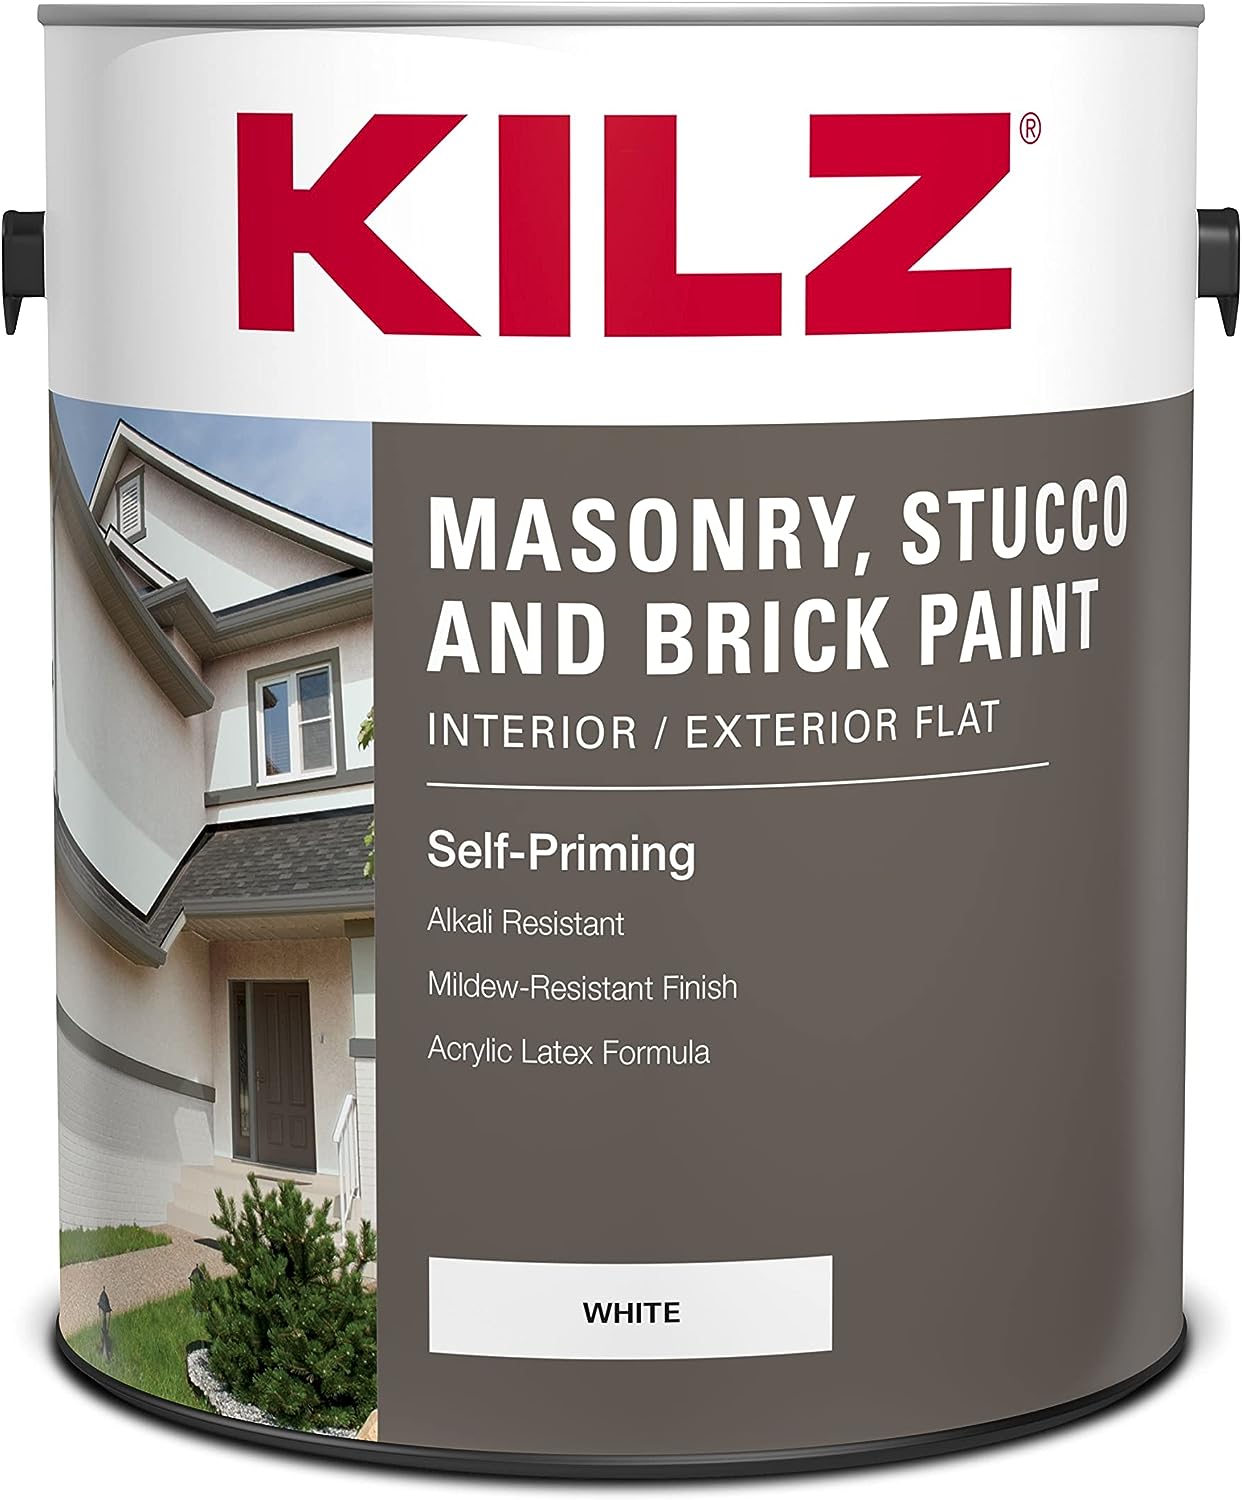 KILZ Self-Priming Masonry, Stucco and Brick Paint, [...]